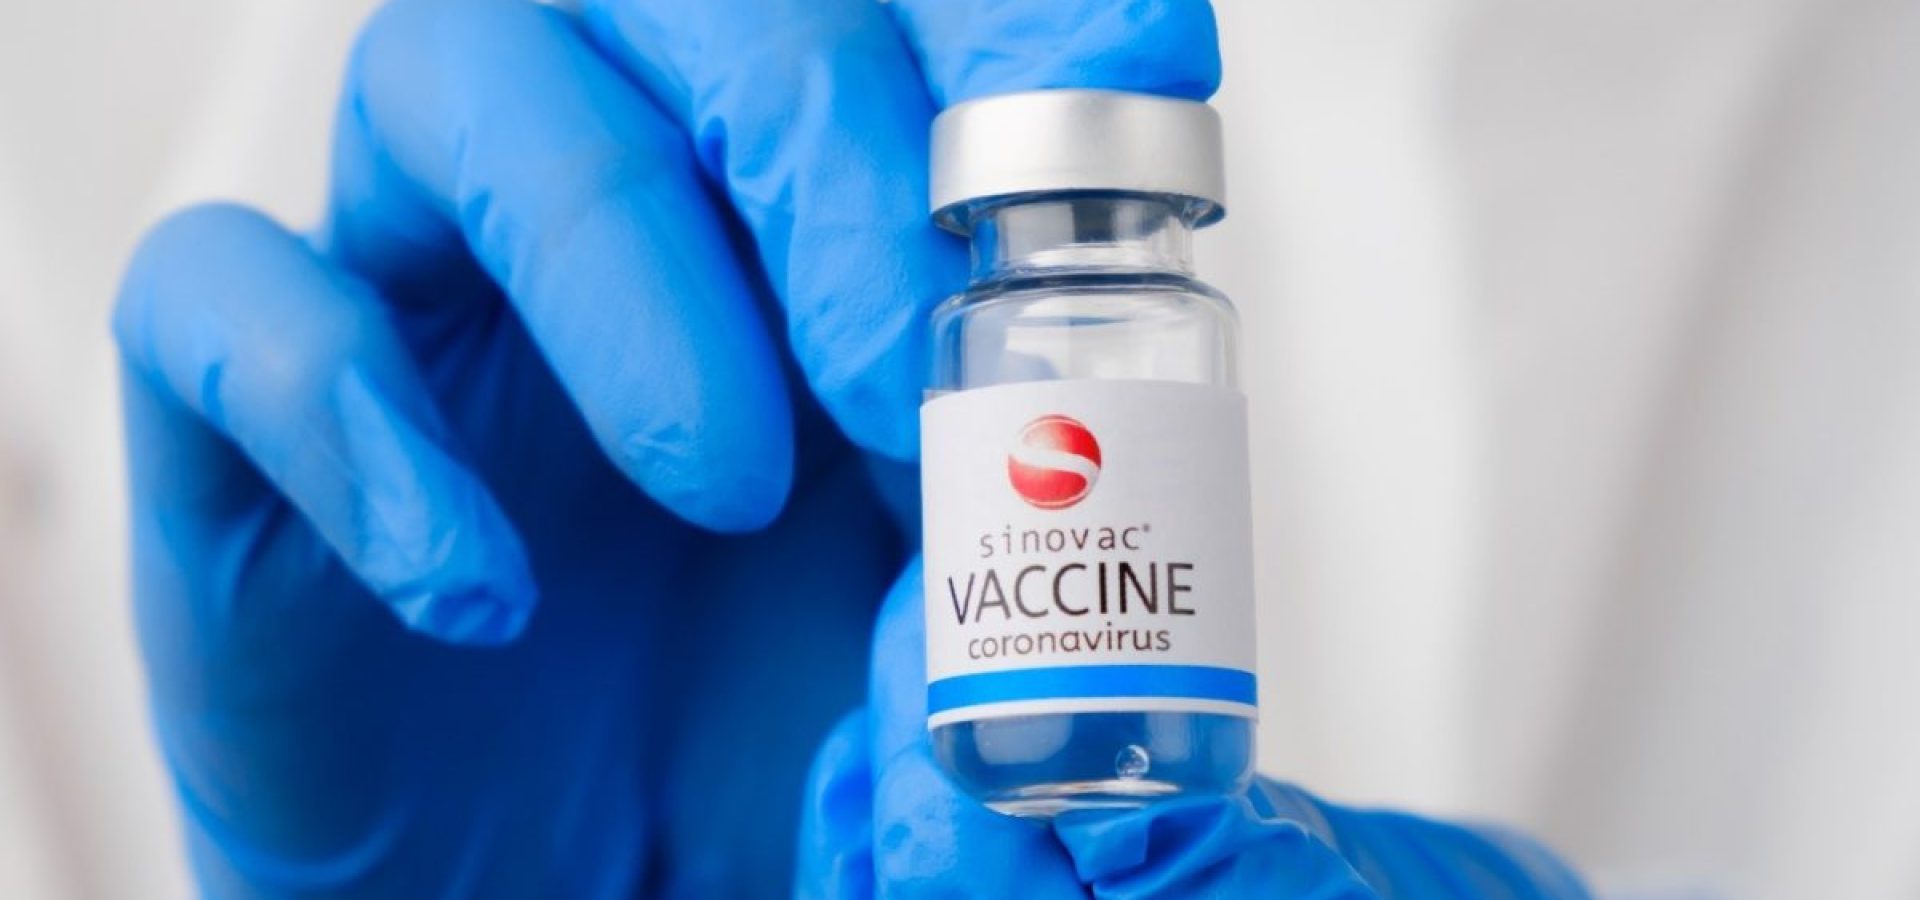 sinovac vaccine